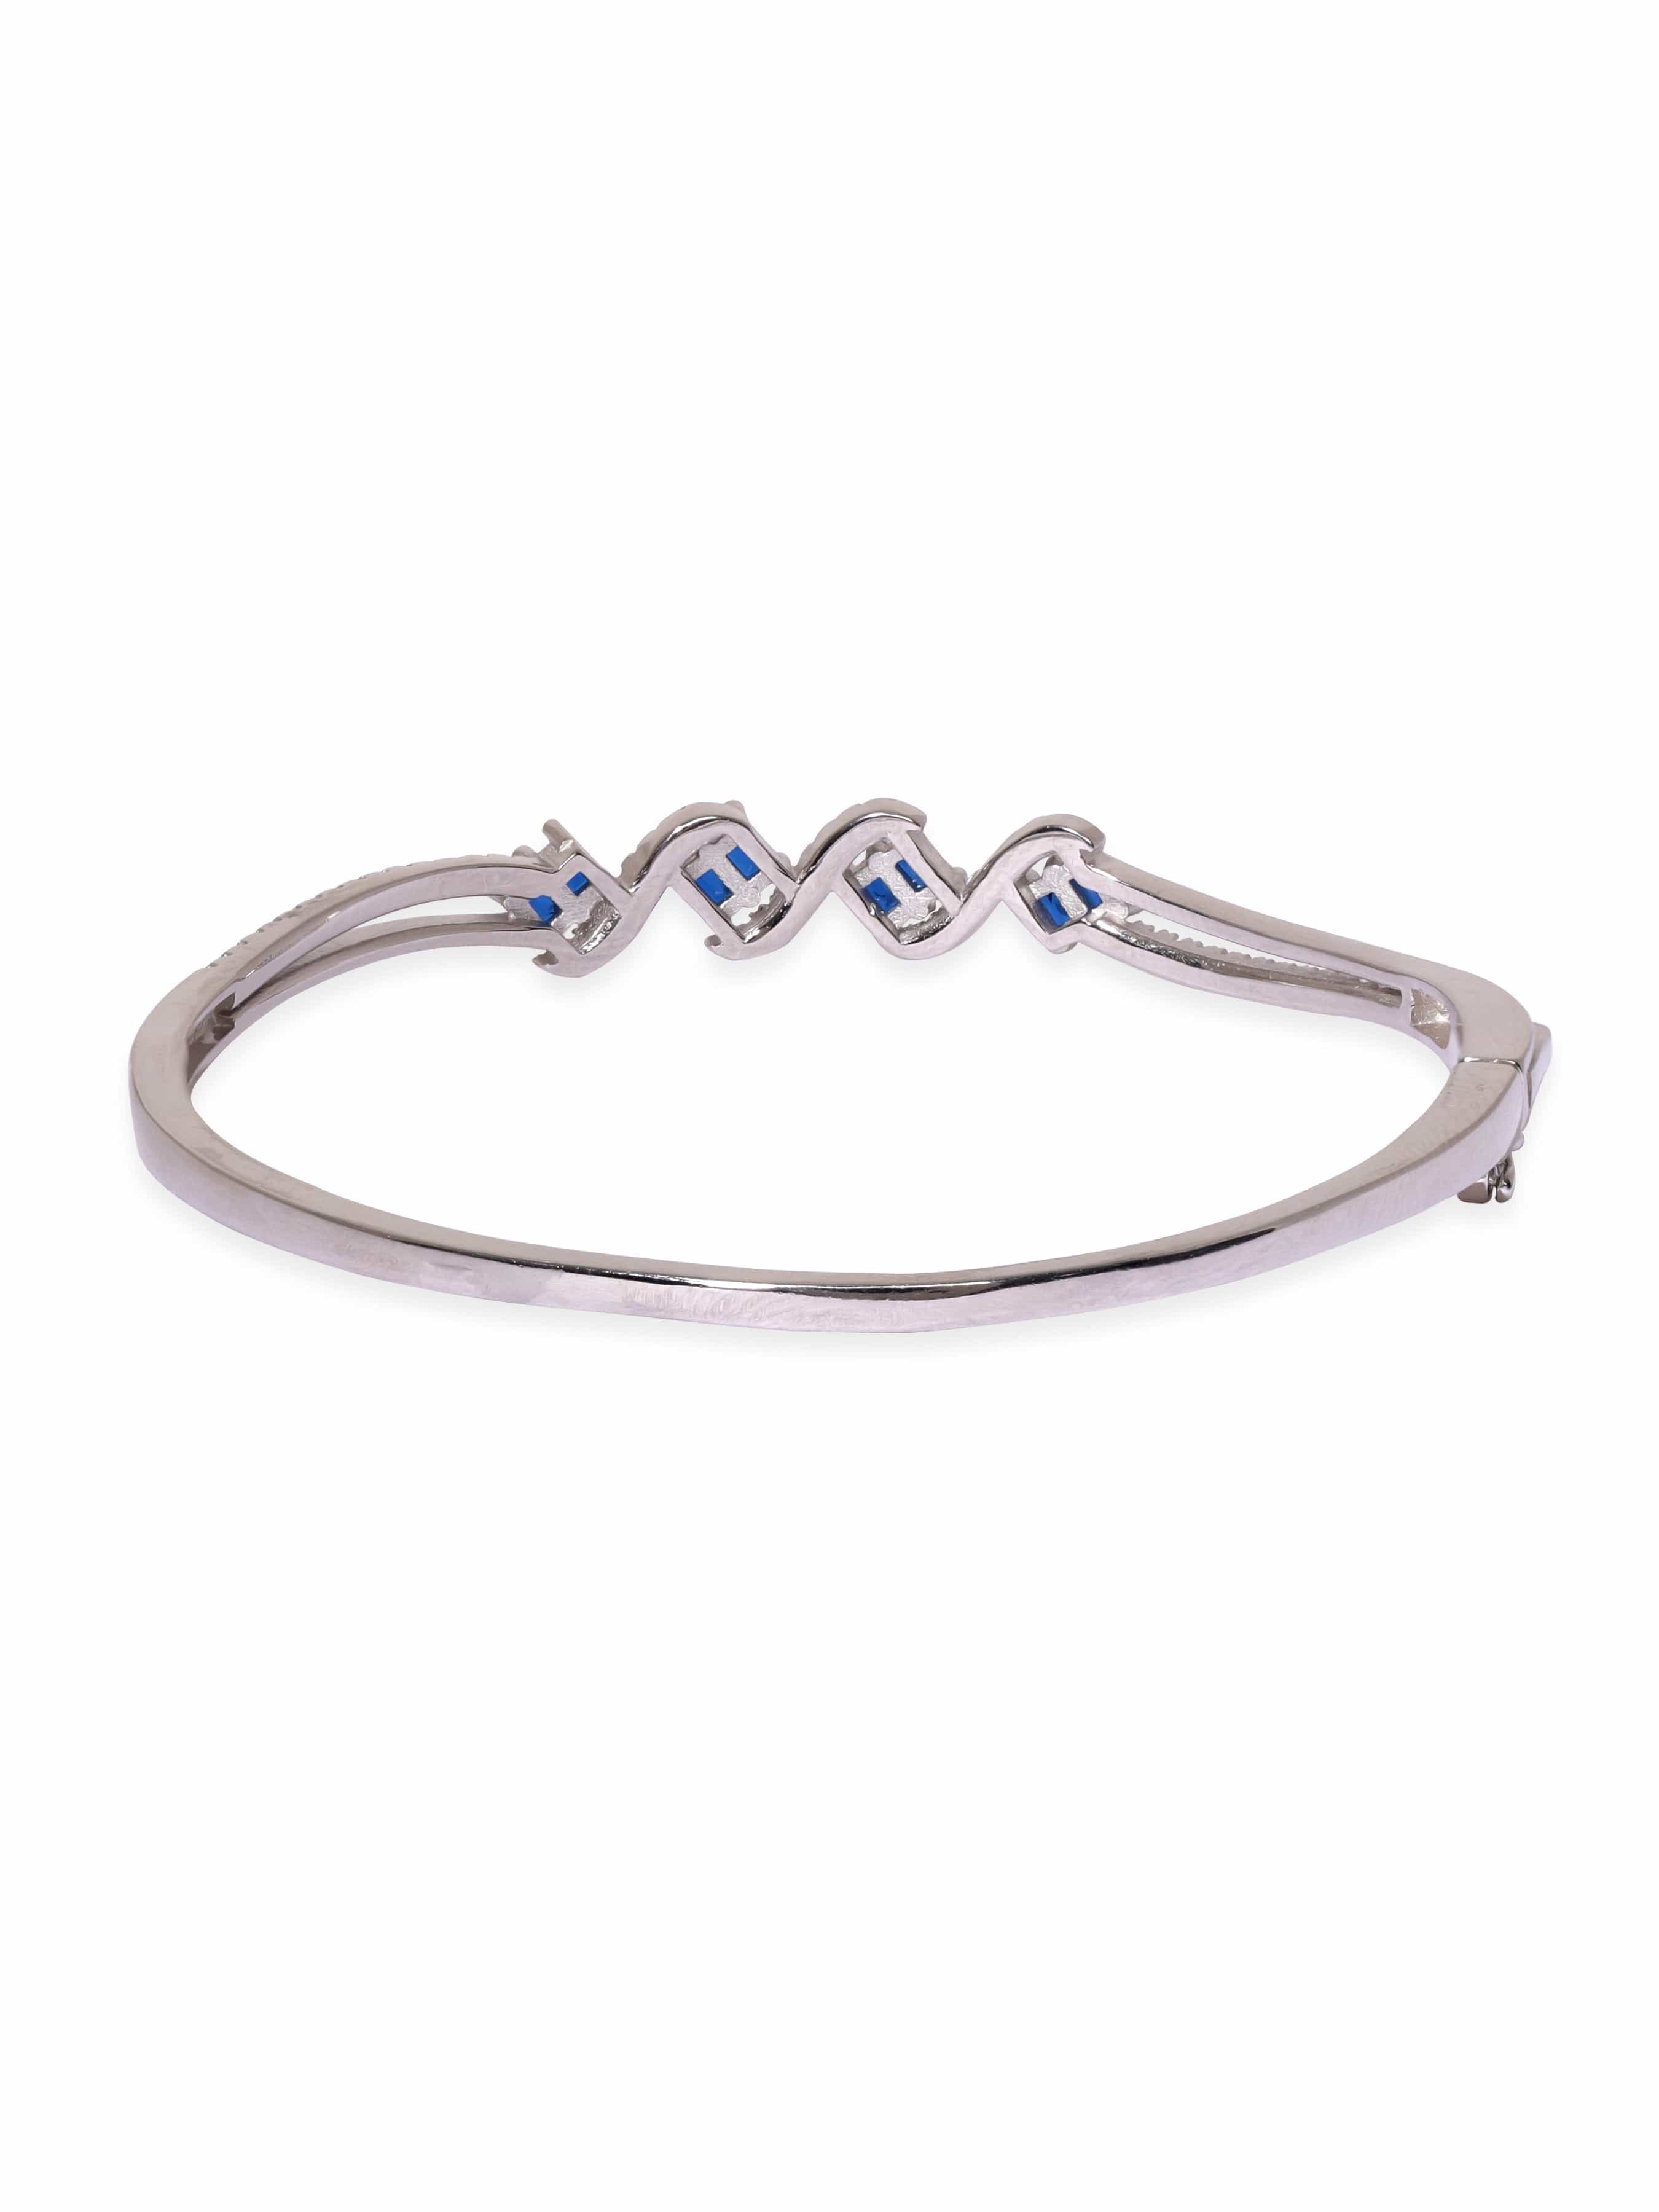 White Gold, Diamond & Blue Enamel Open Bracelet | Fabergé